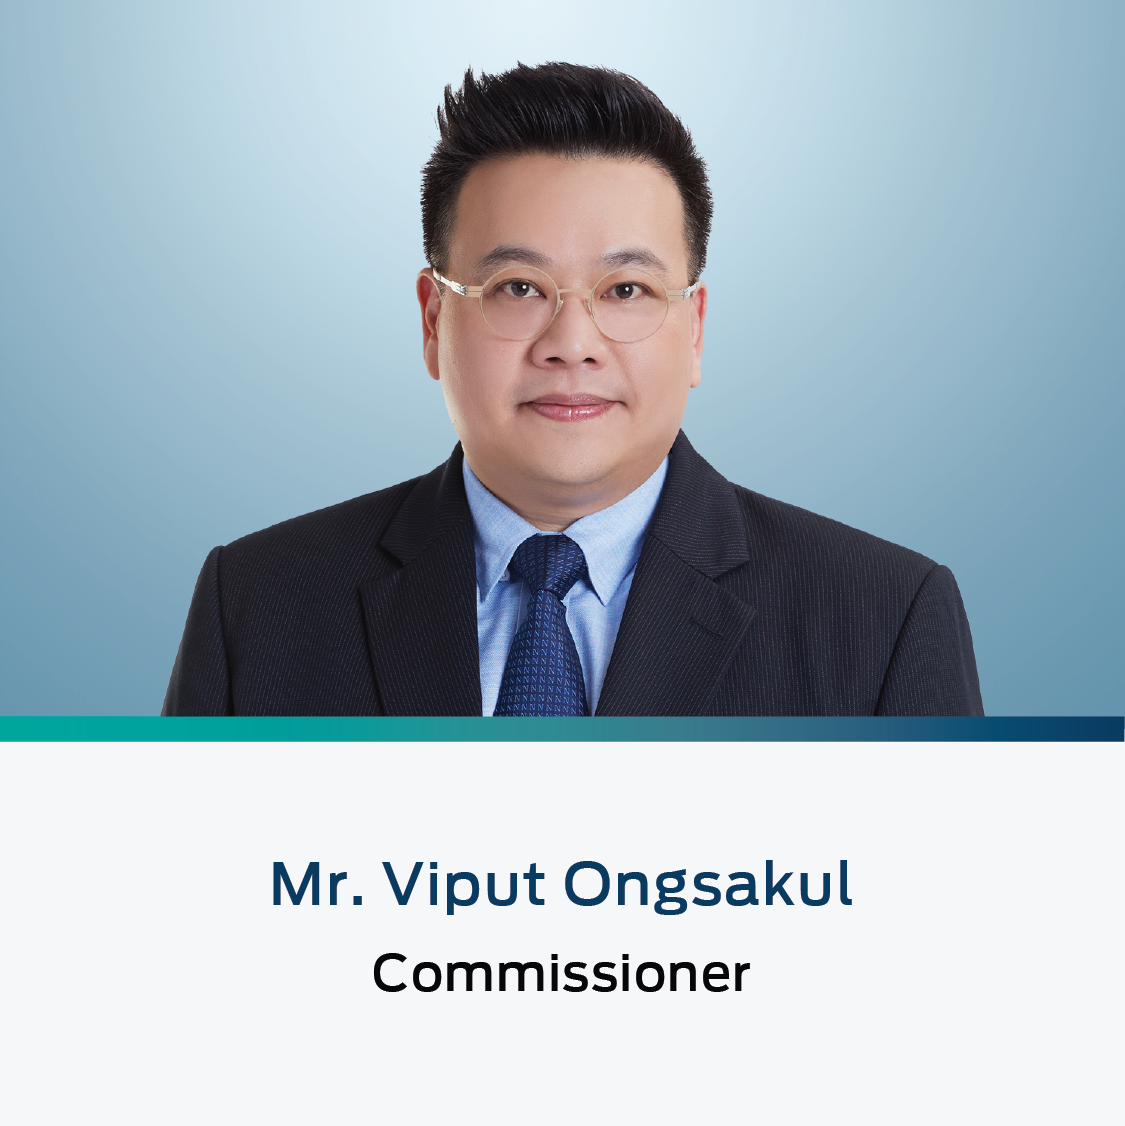 Mr. Viput Ongsakul